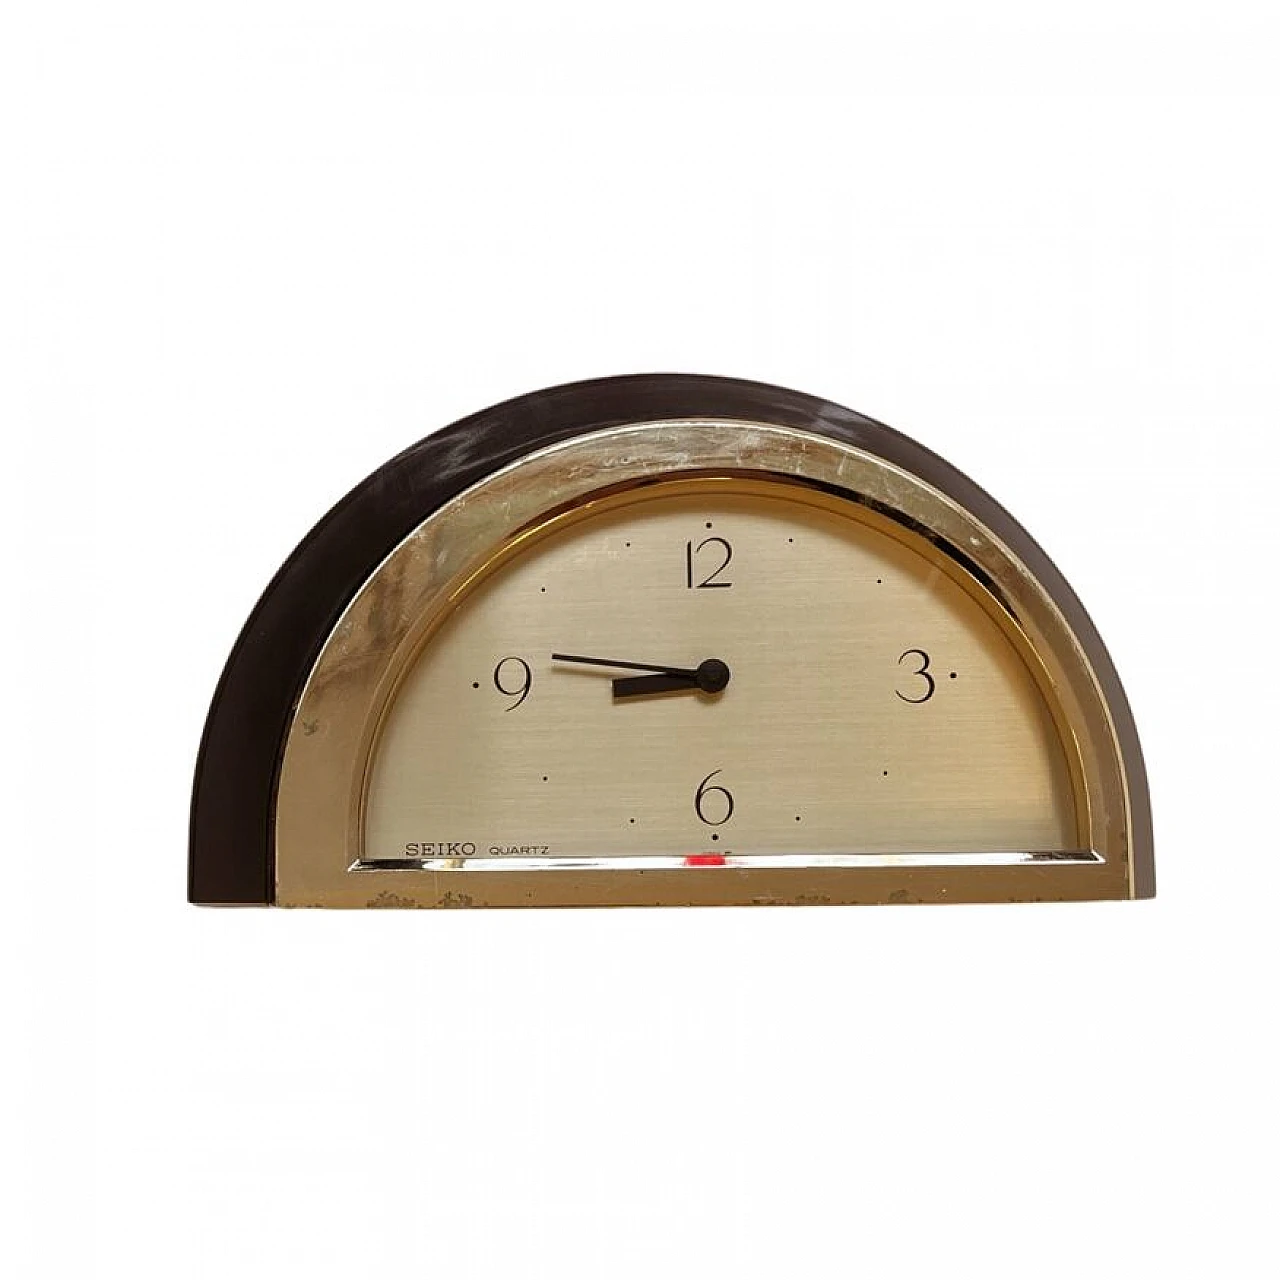 Hollywood Regency-style Seiko mantel clock, 1980s 2